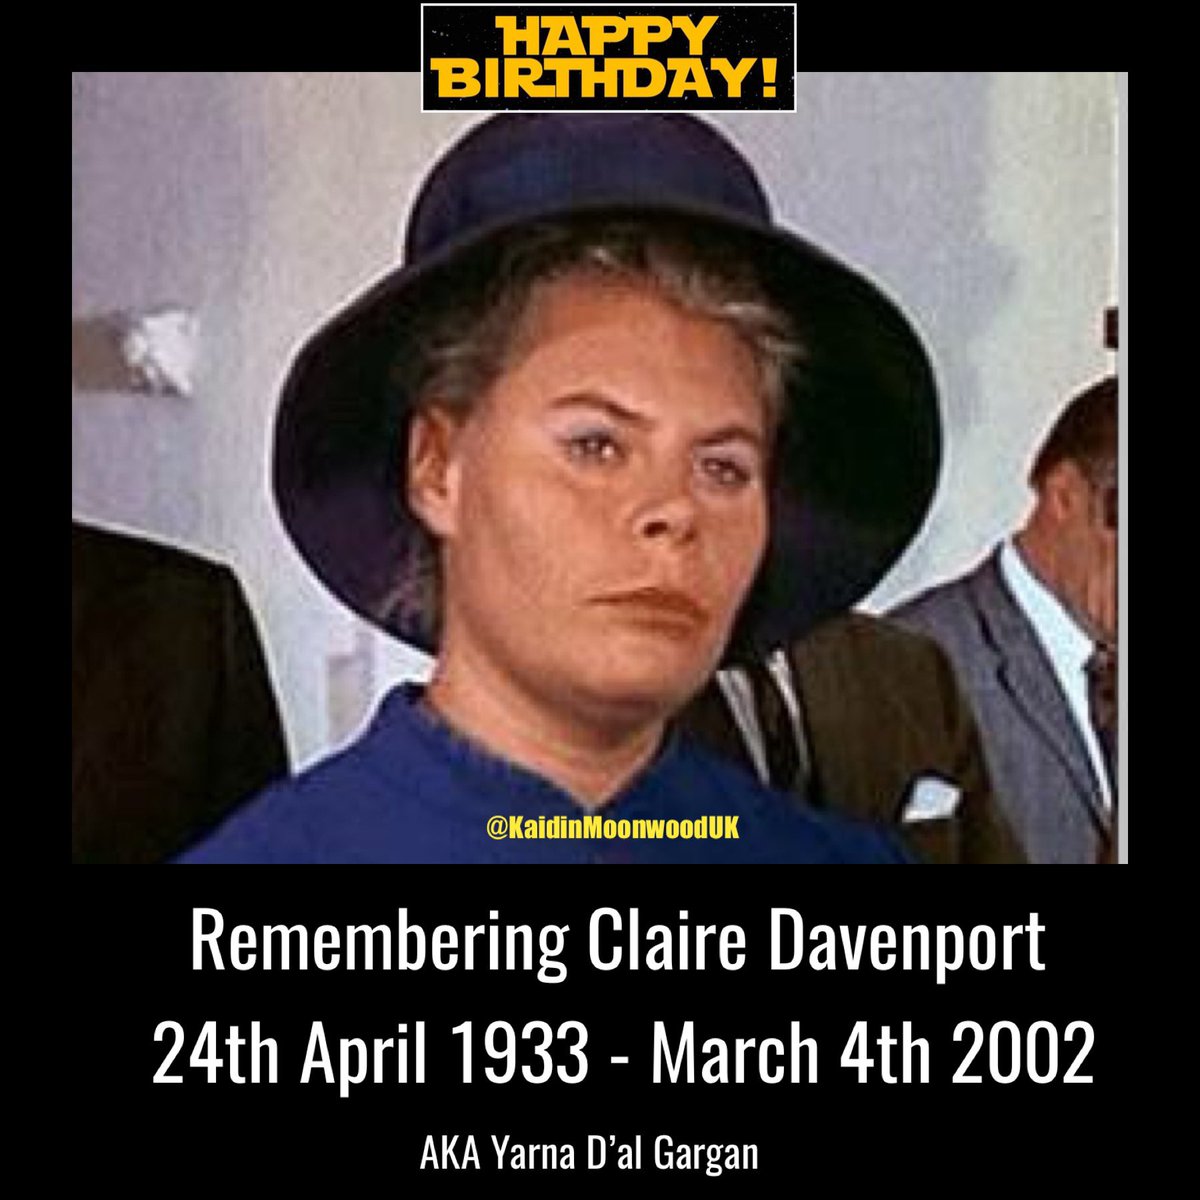 Remembering Claire Davenport aka Yarna D’al Gargan. 
24th April 1933 to 25th February 2002.
#StarWarsBirthday #ClaireDavenport #YarnaDalGargan #ReturnOfTheJedi #StarWars #AtOneWithTheForce
starwars.wikia.com/wiki/Claire_Da…